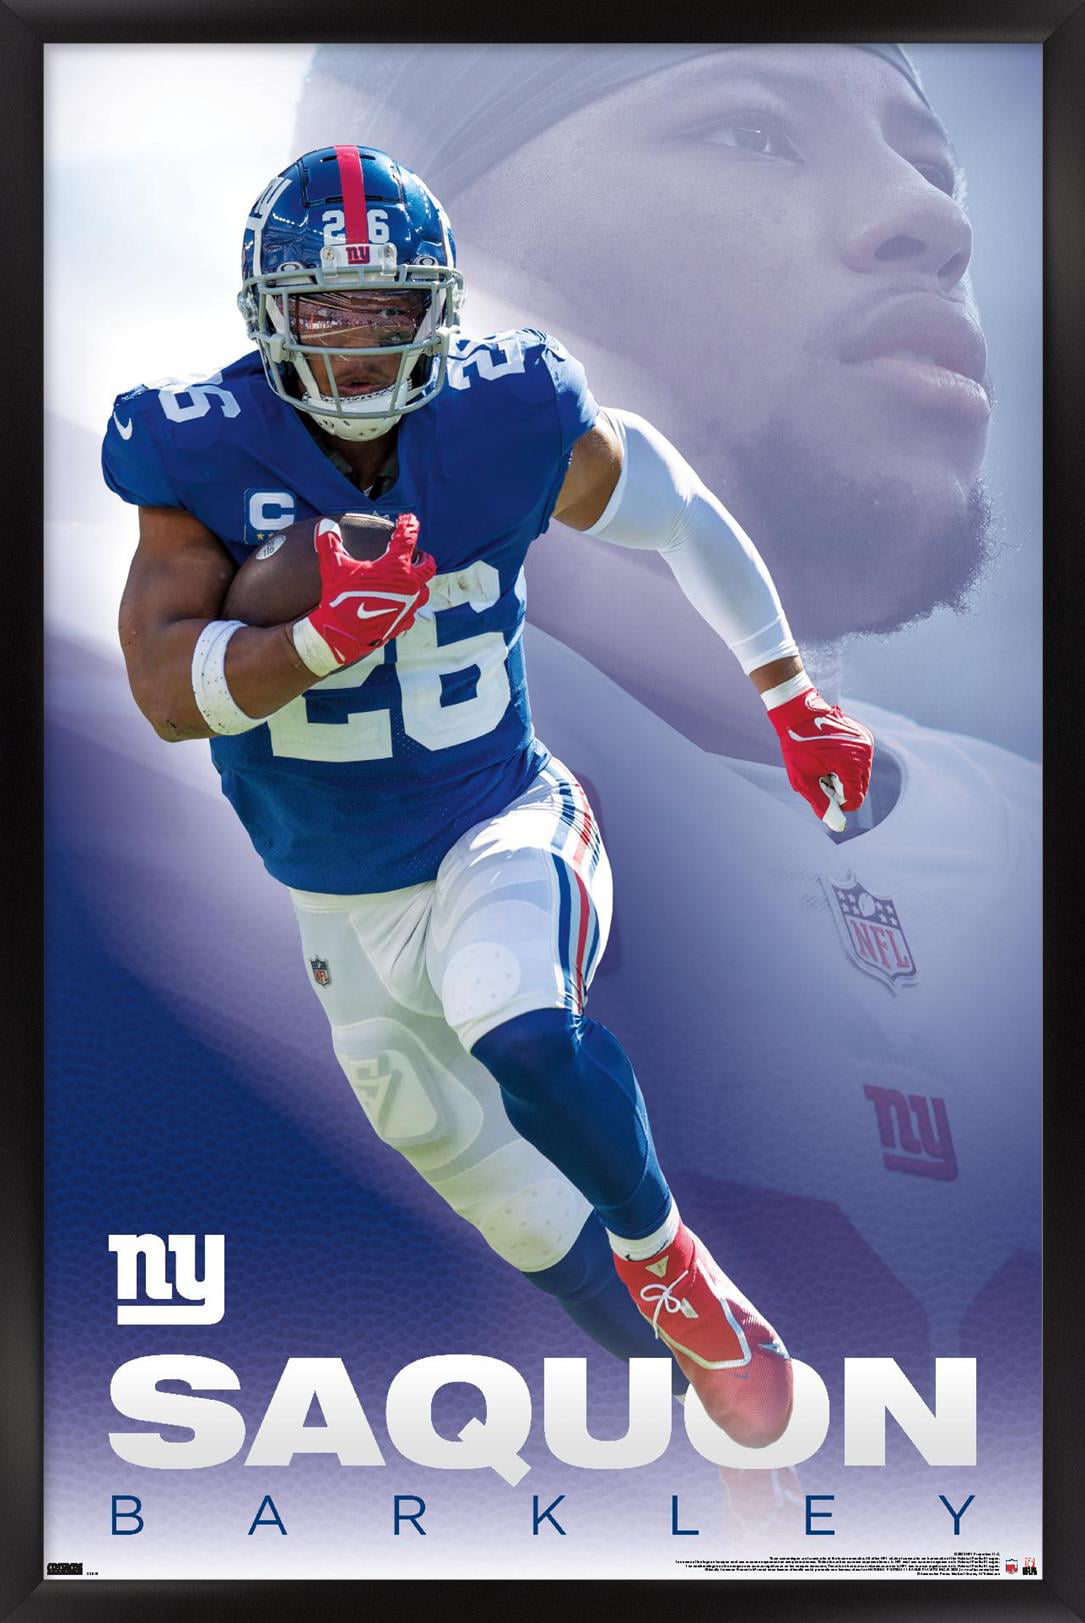 NFL New York Giants - Saquon Barkley 22 Wall Poster, 22.375' x 34' 